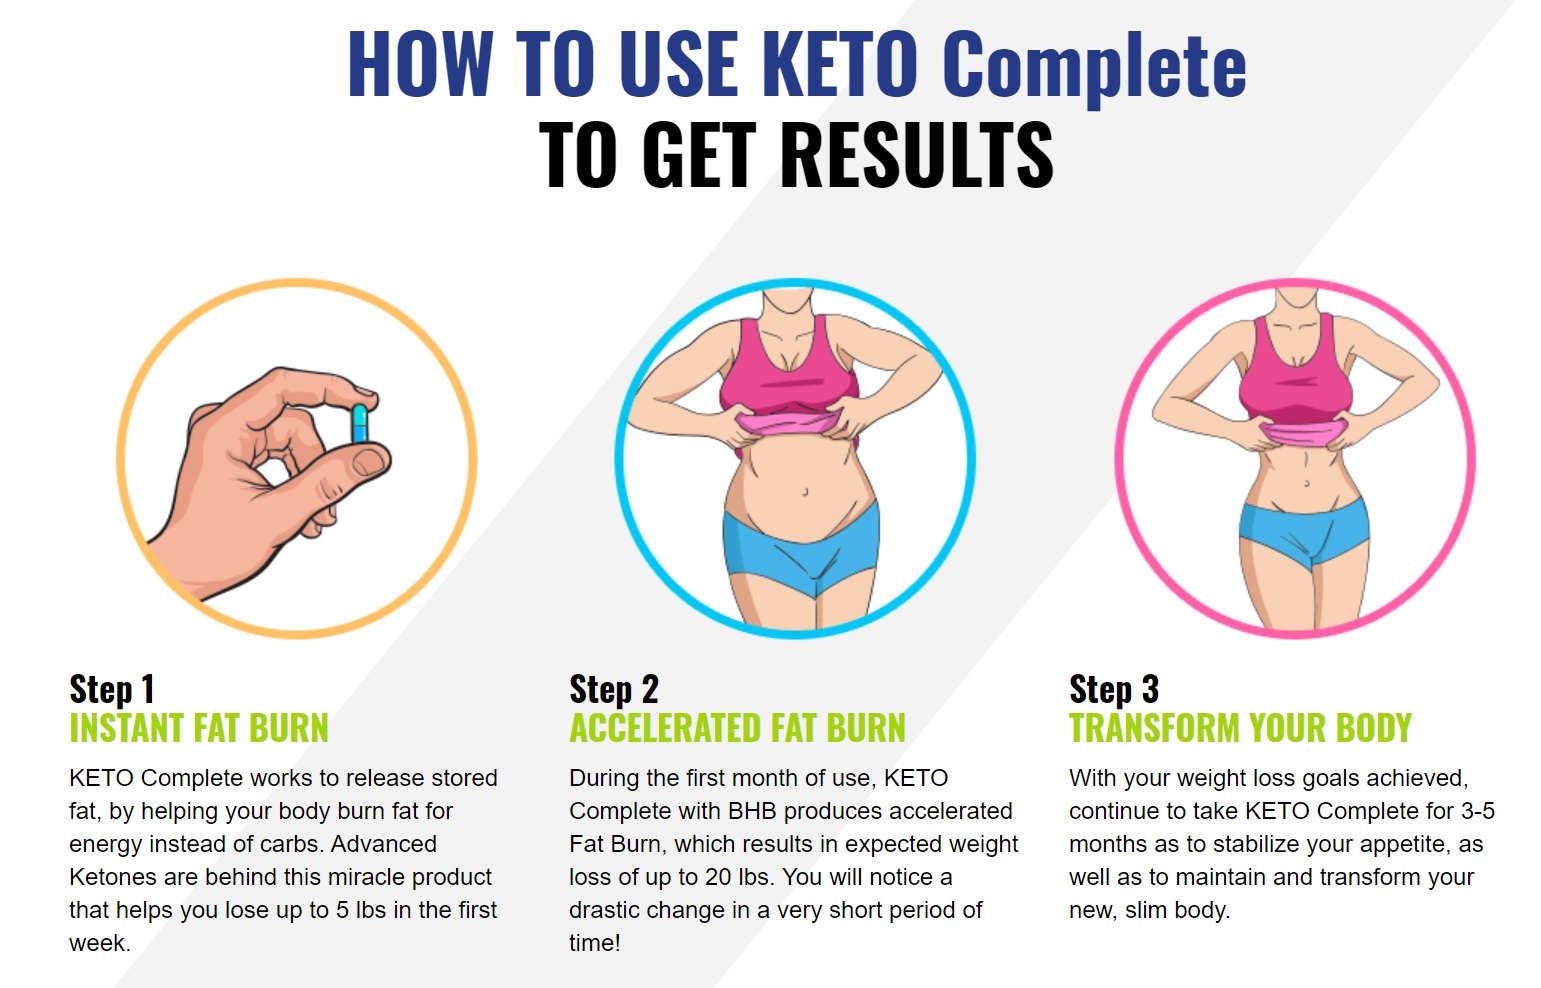 Keto Complete Use